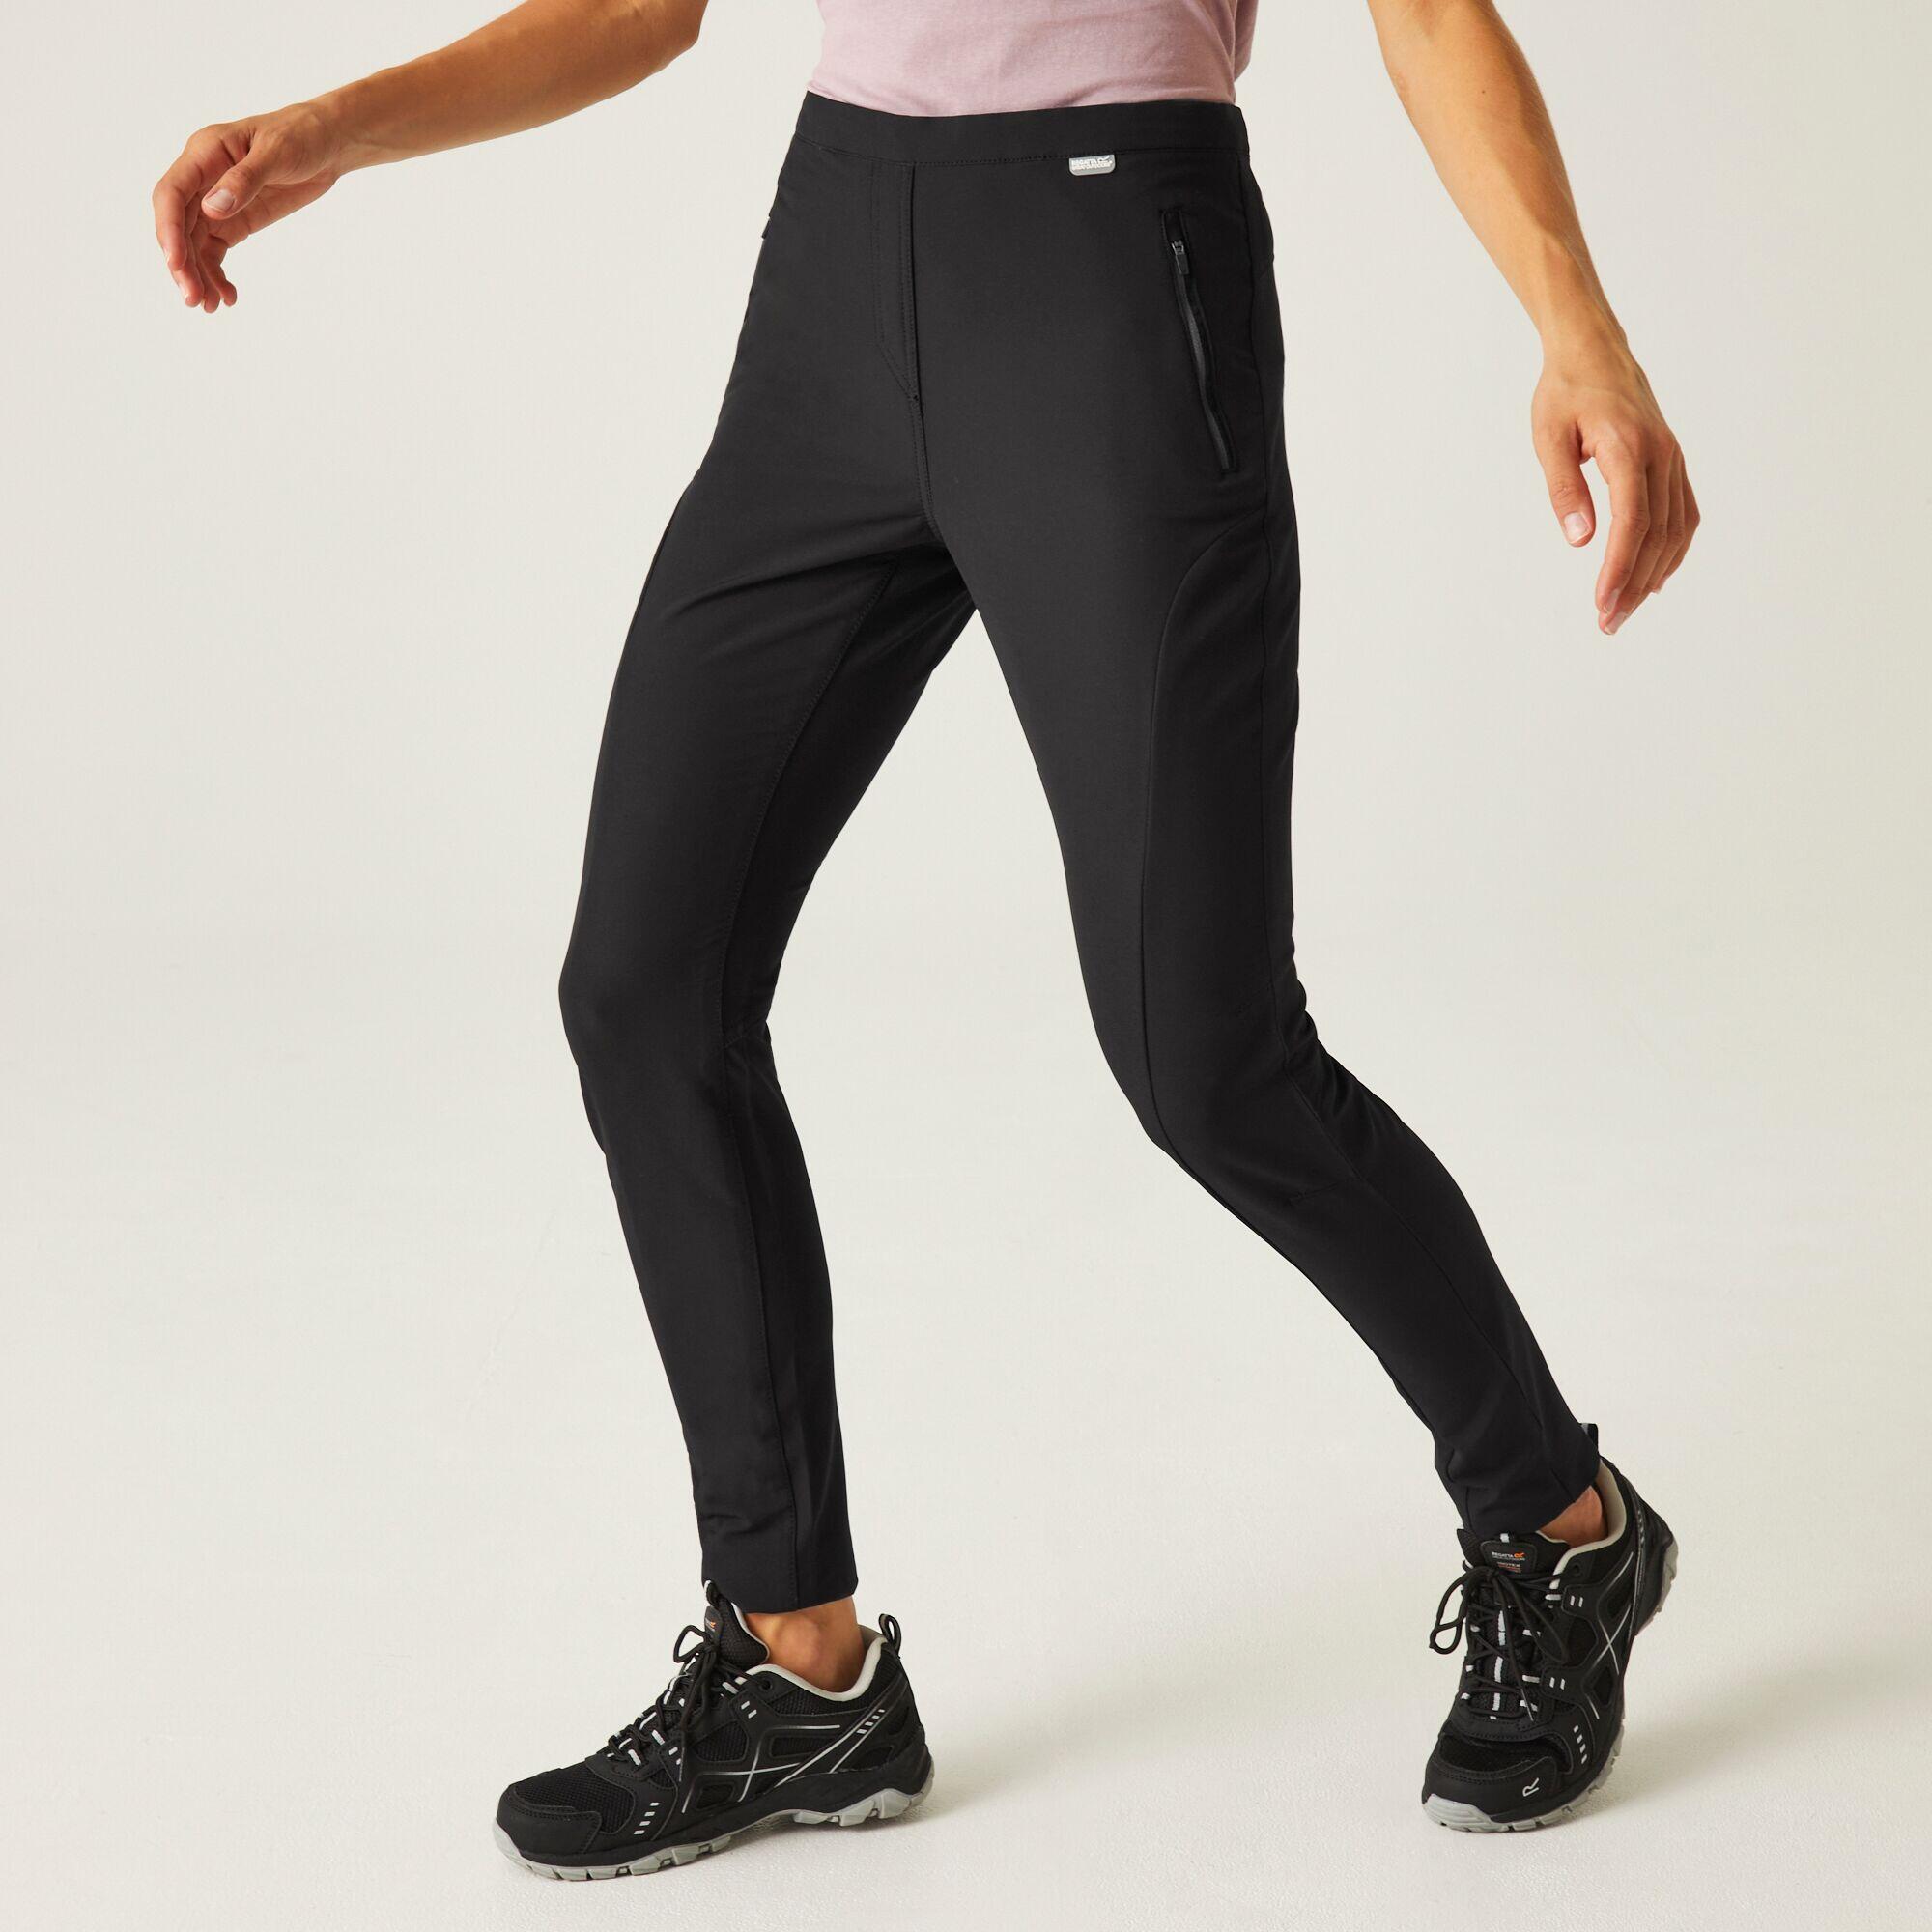 Pentre Stretch Women's Hiking Trousers - Black 1/6